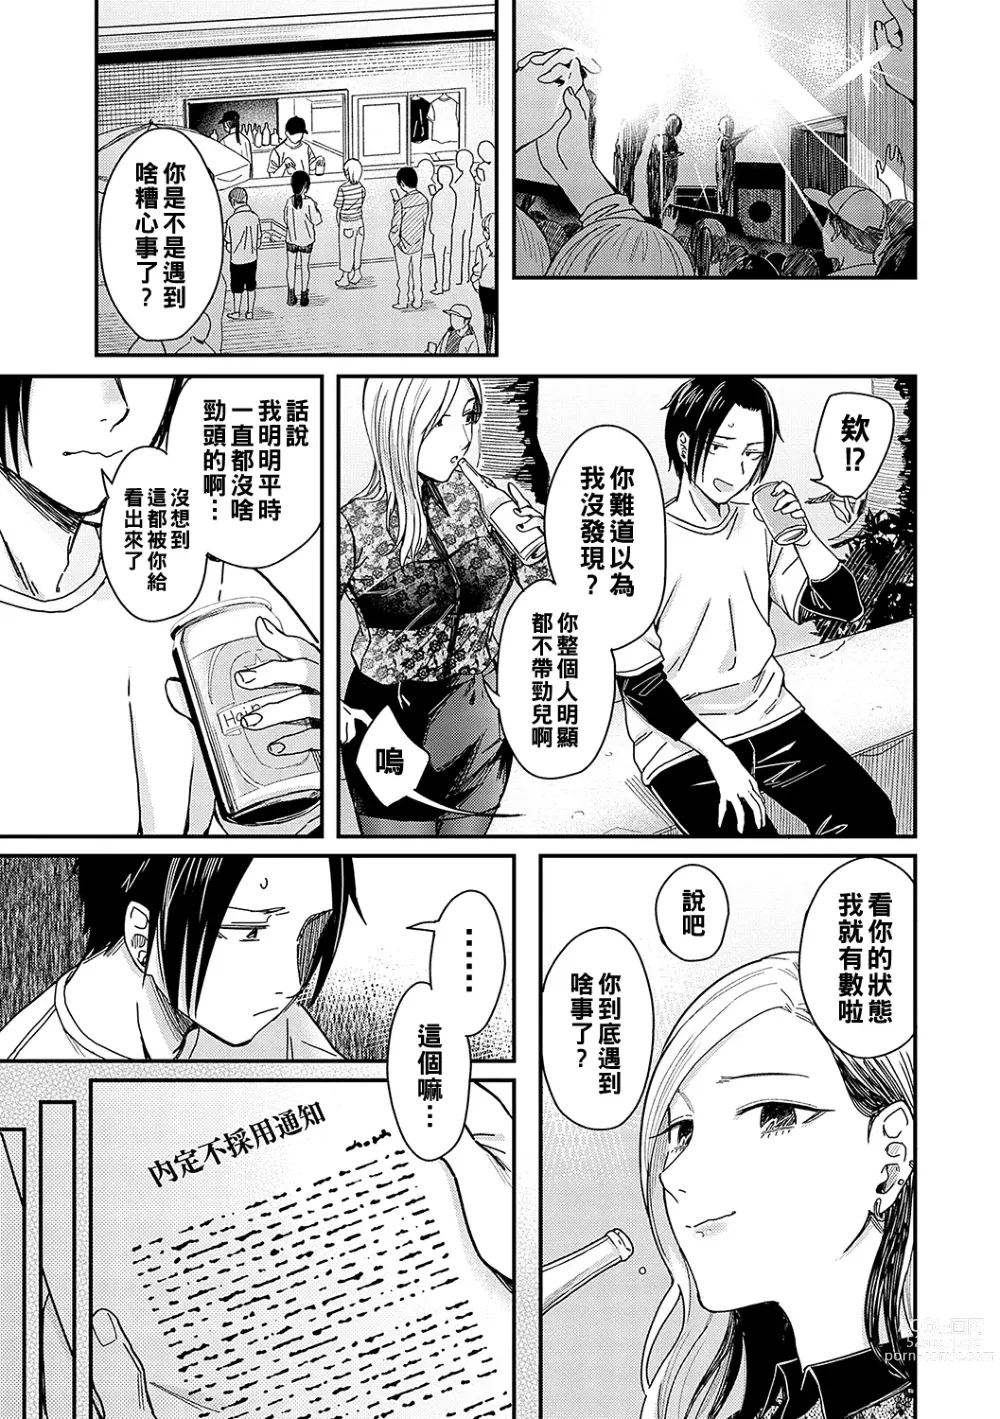 Page 3 of manga Zankyou  to Spotlight - Reverberation and spotlight